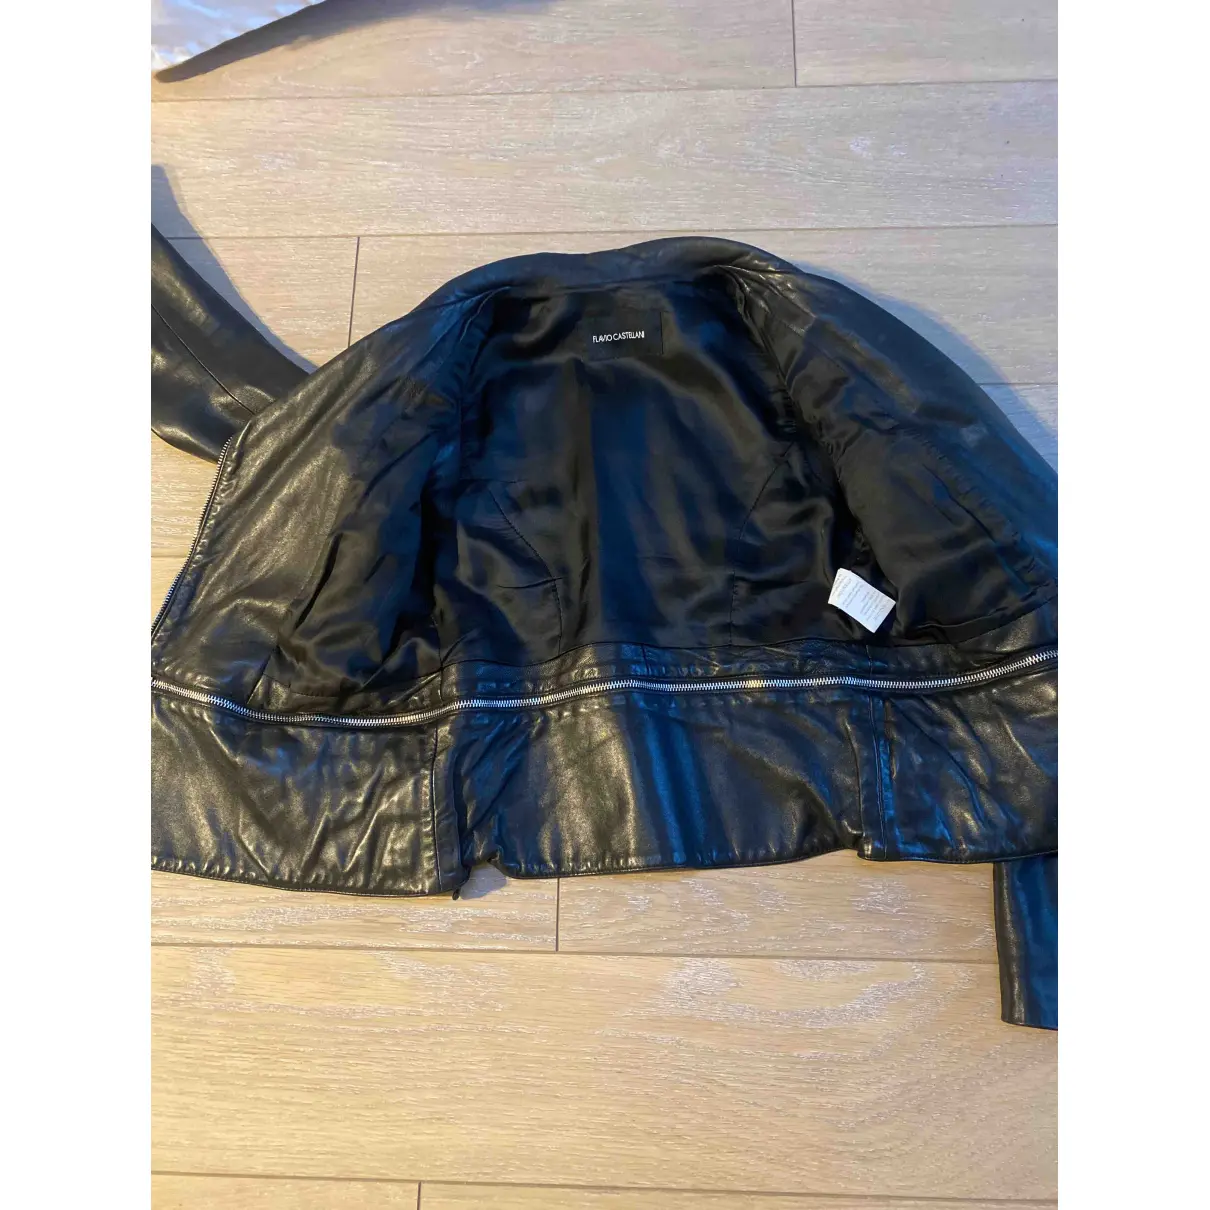 Leather jacket Flavio Castellani